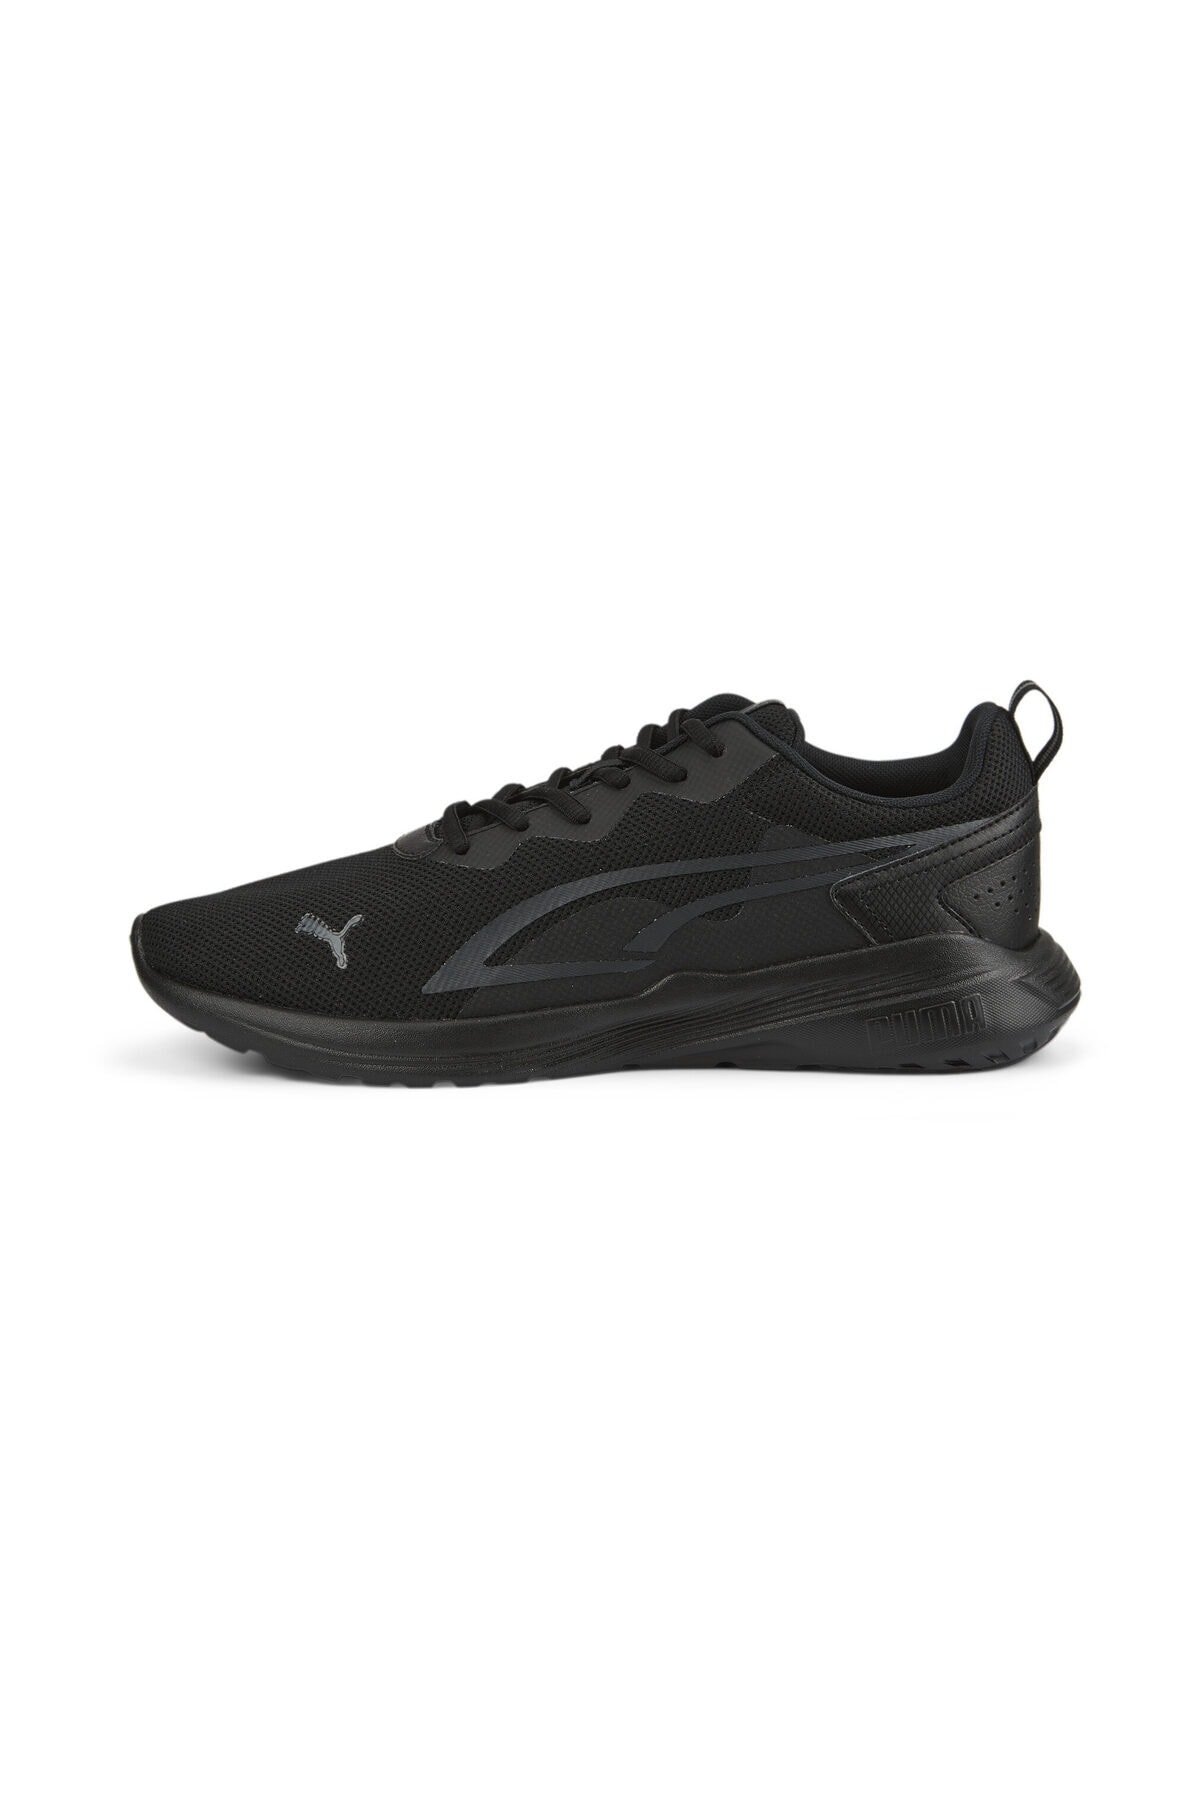 Puma Unisex Sneaker - All-Day Active Puma Black-Dark Shadow - 38626901